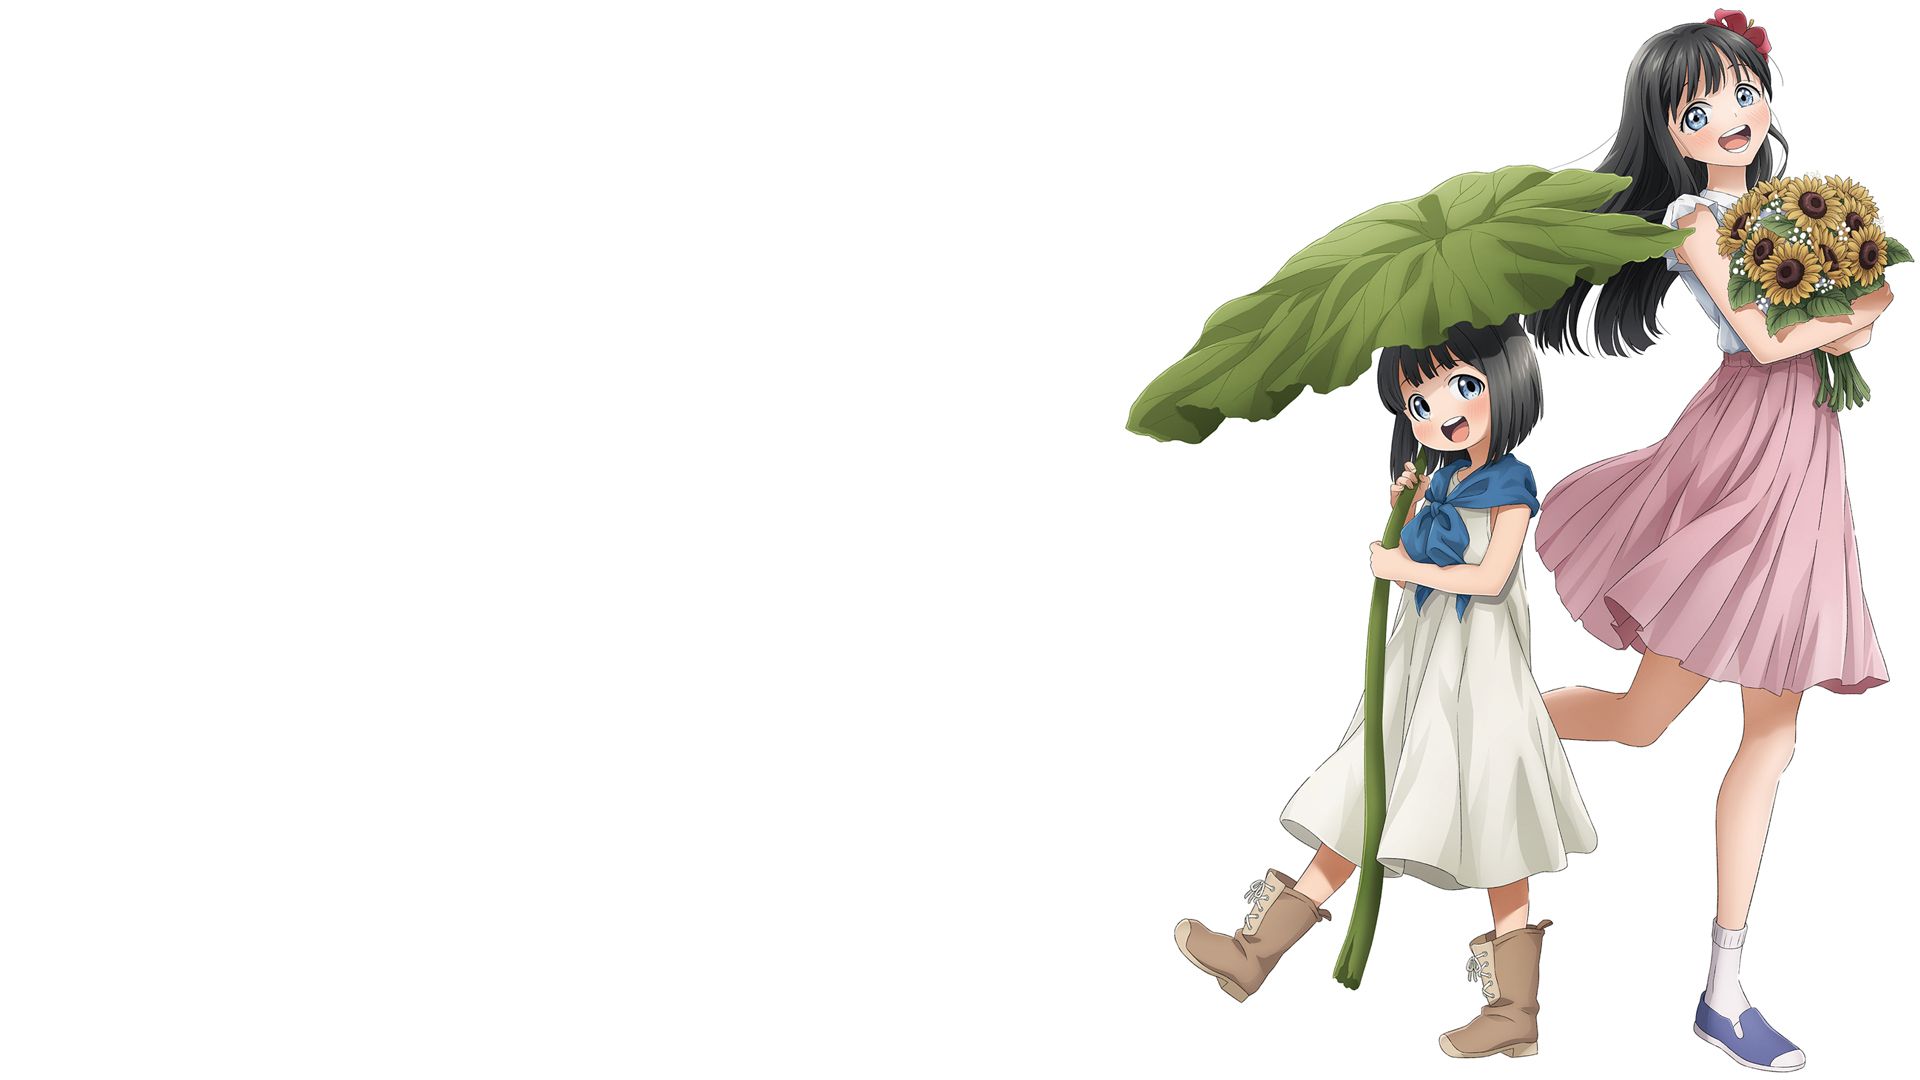 Akebi's Sailor Uniform background